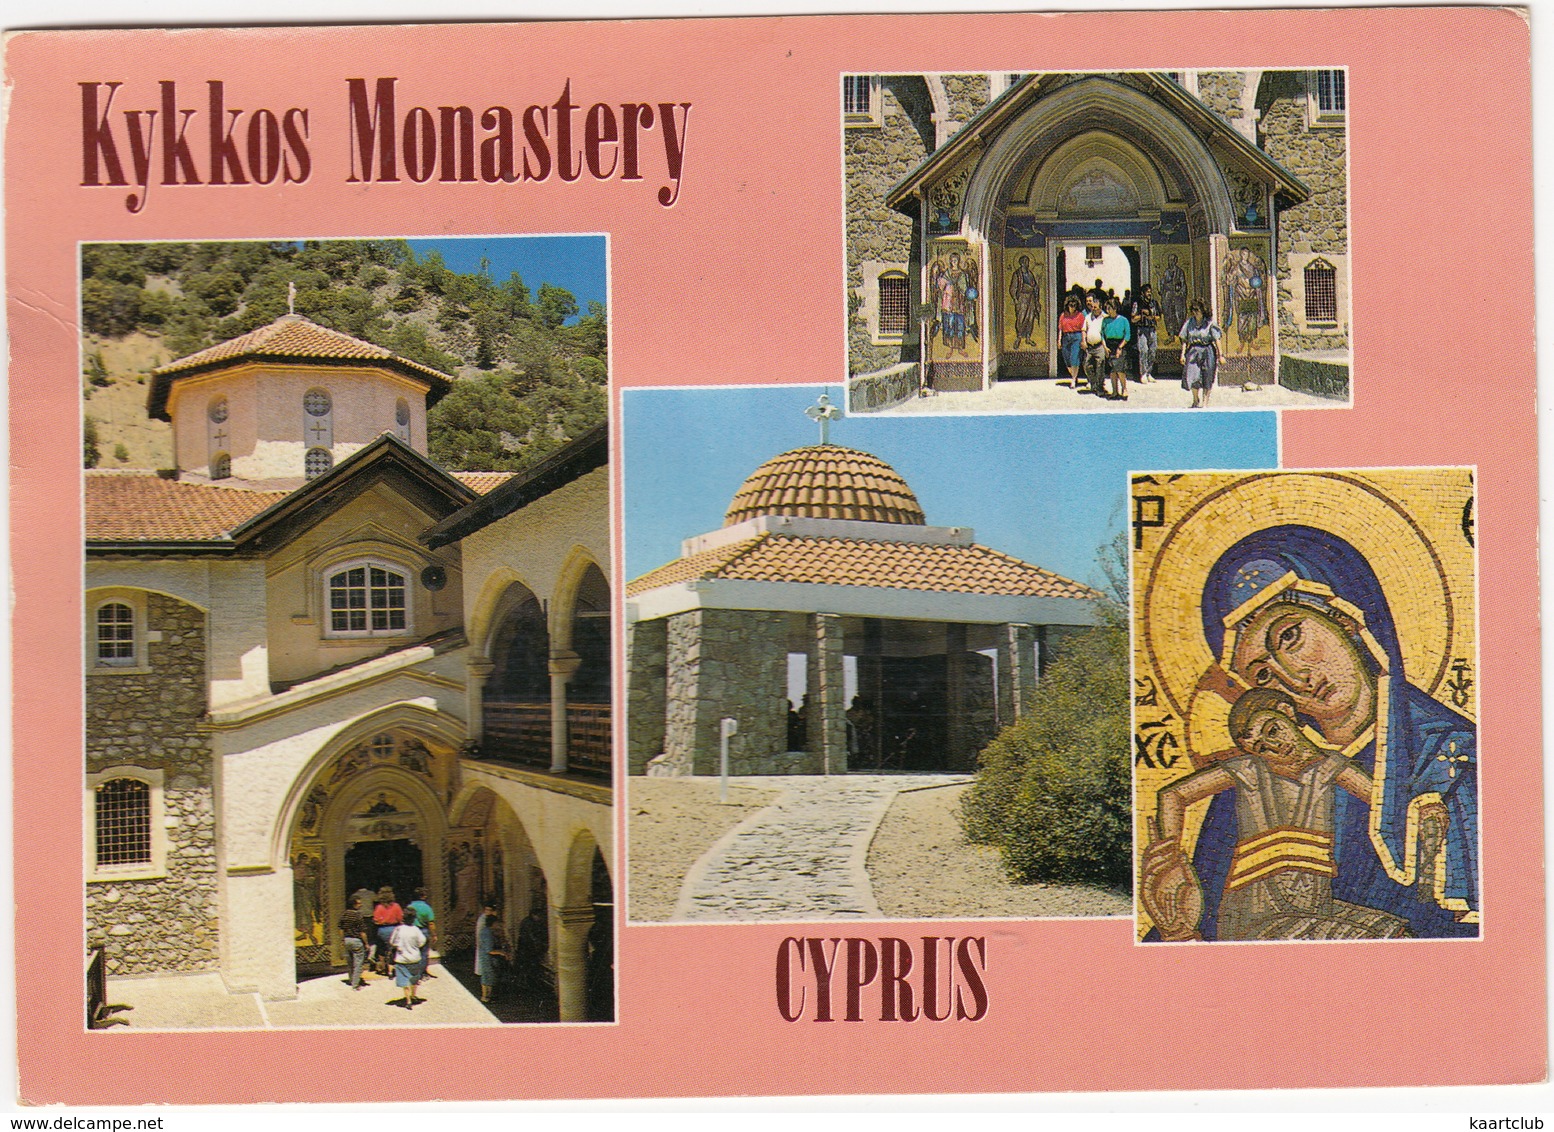 Cyprus - Kykkos Monastery - Cyprus